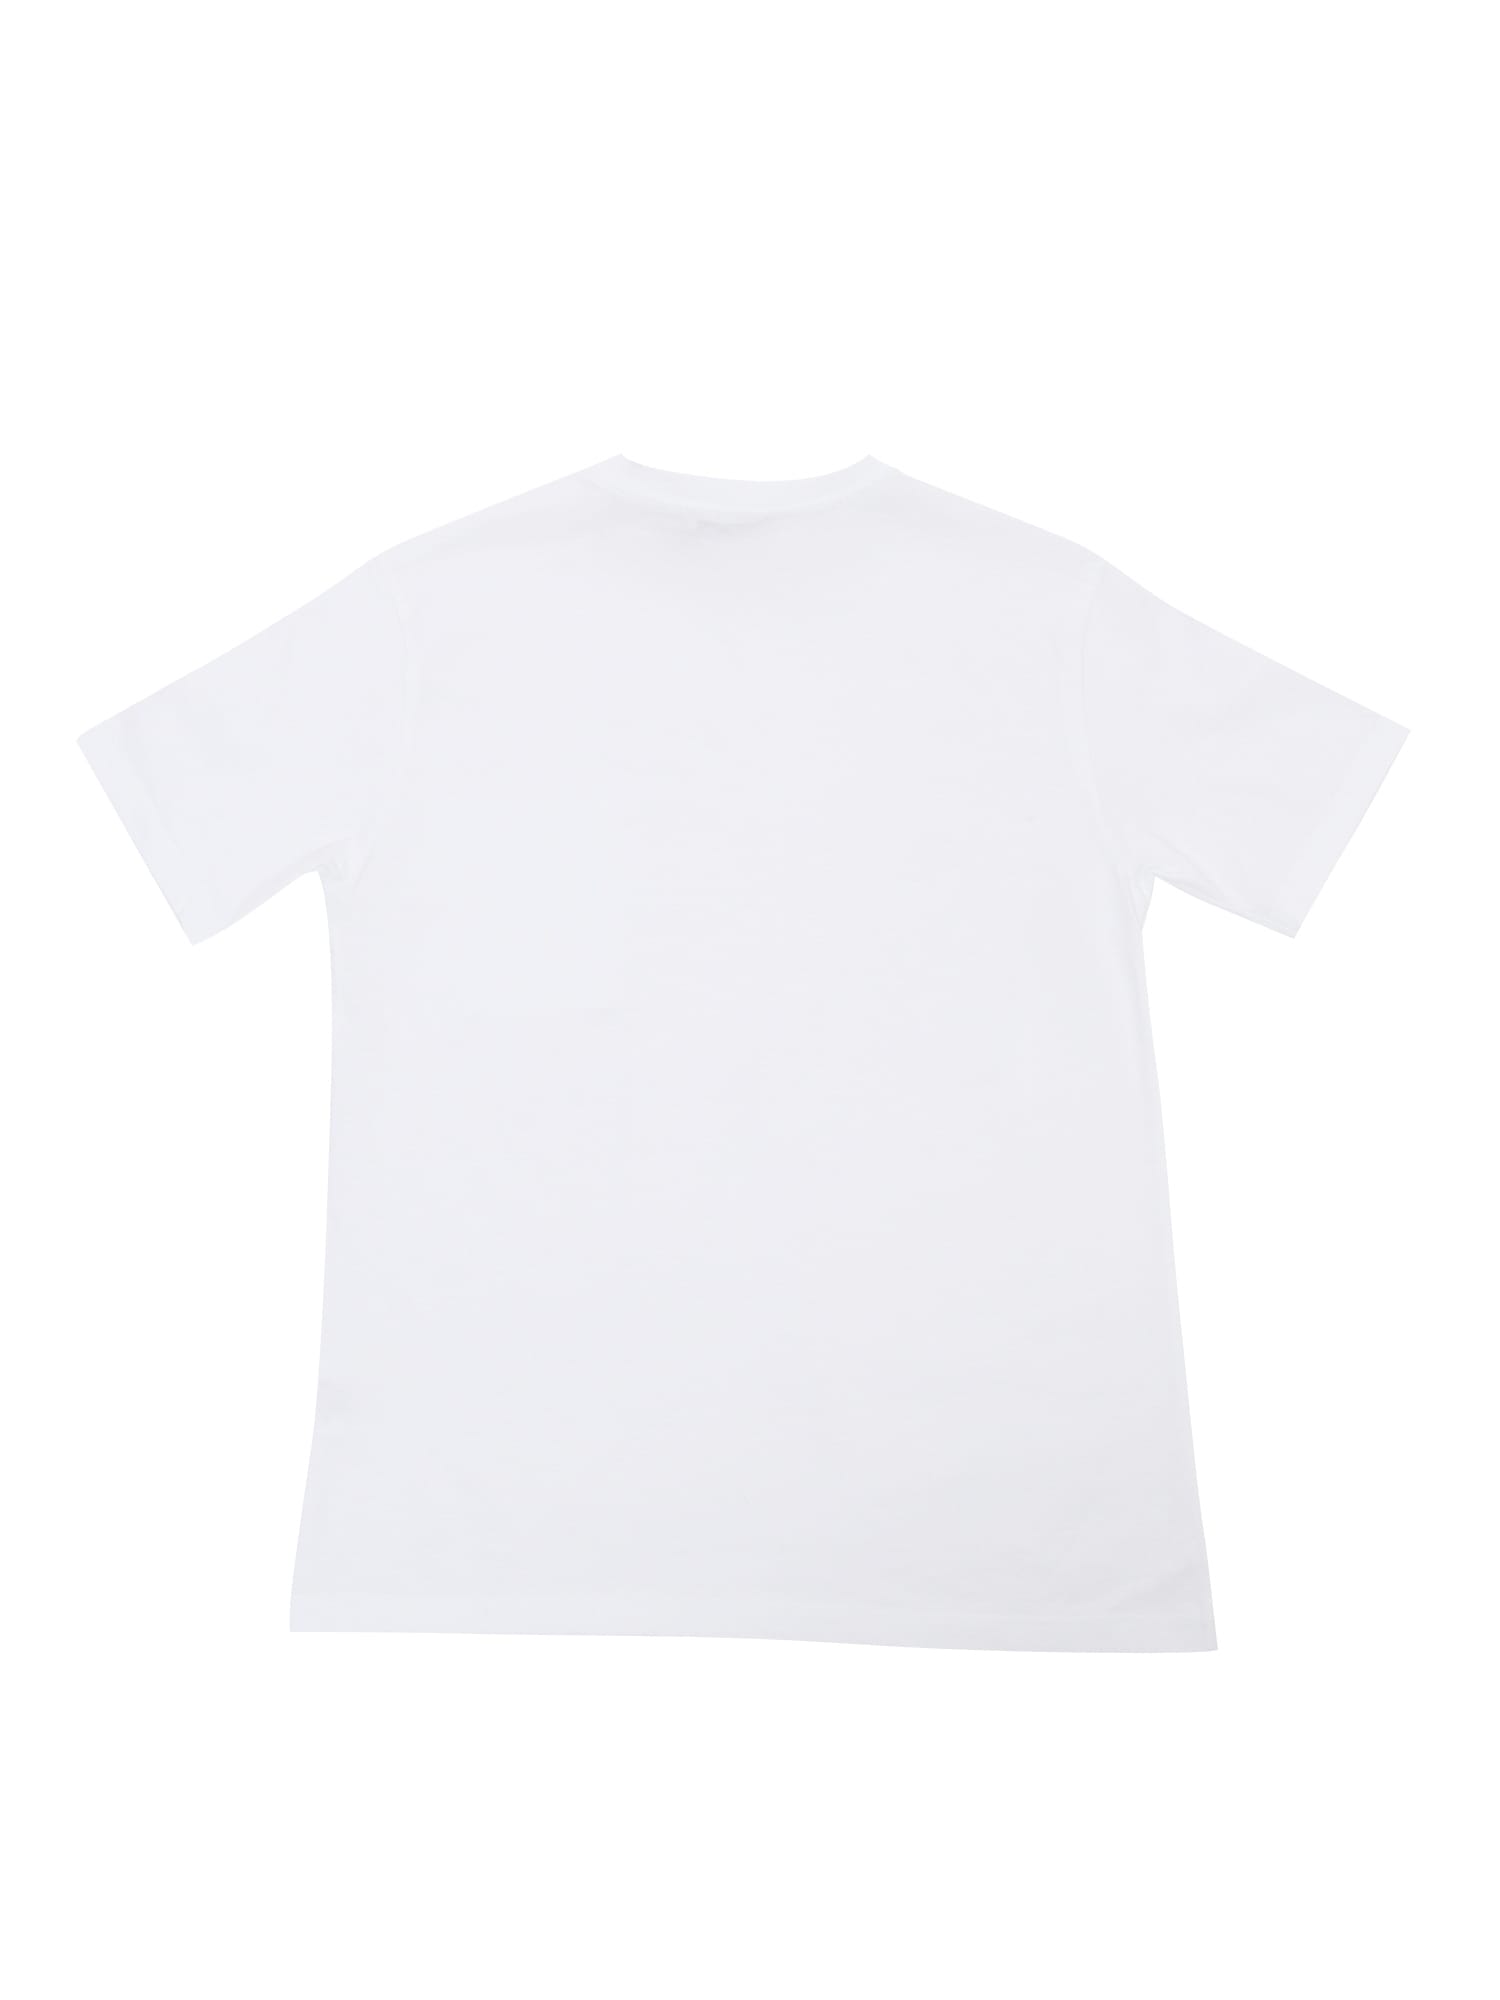 Shop Msgm White T-shirt